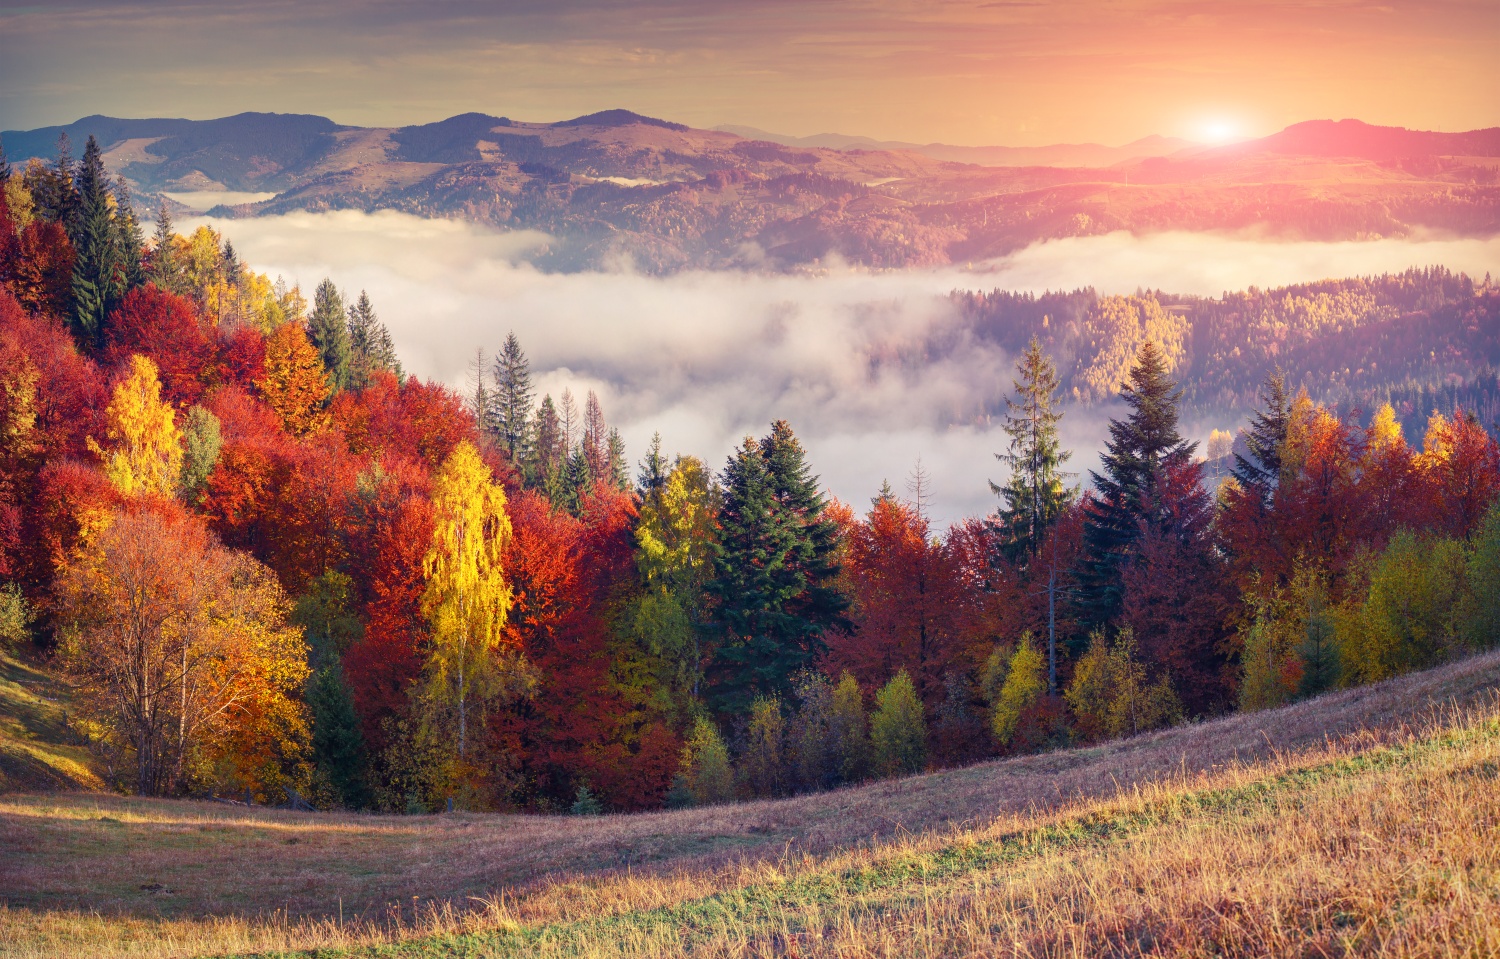 Colorful autumn sunrise in the mountains. - Visit Poland DMC